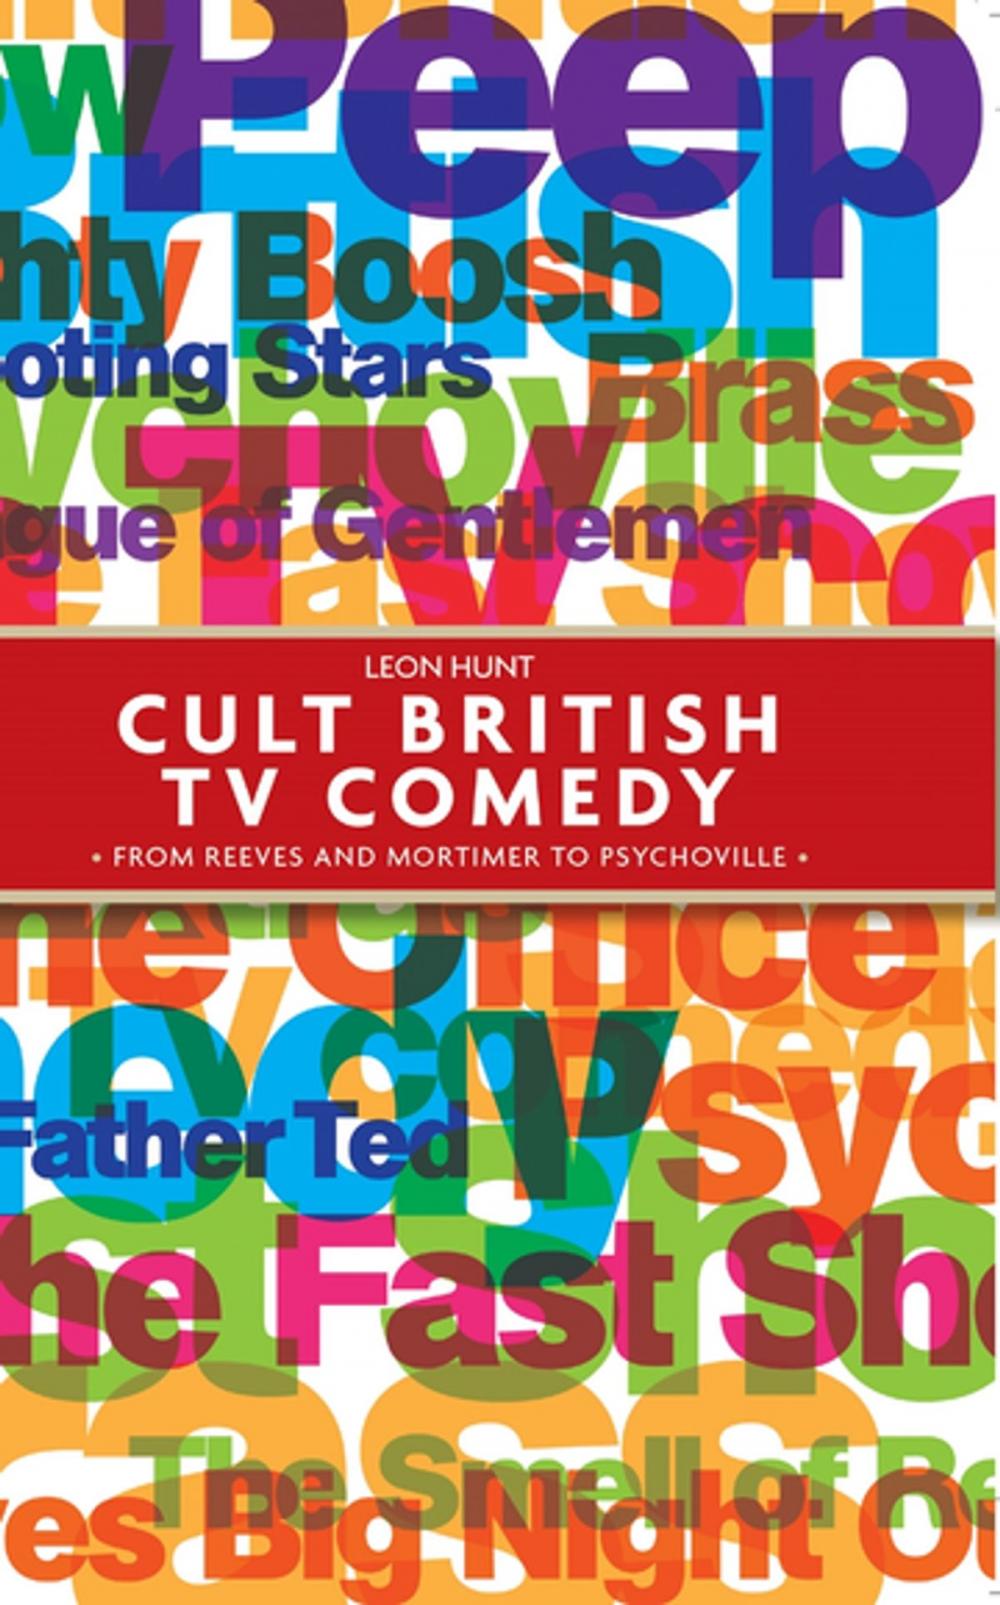 Big bigCover of Cult british TV comedy